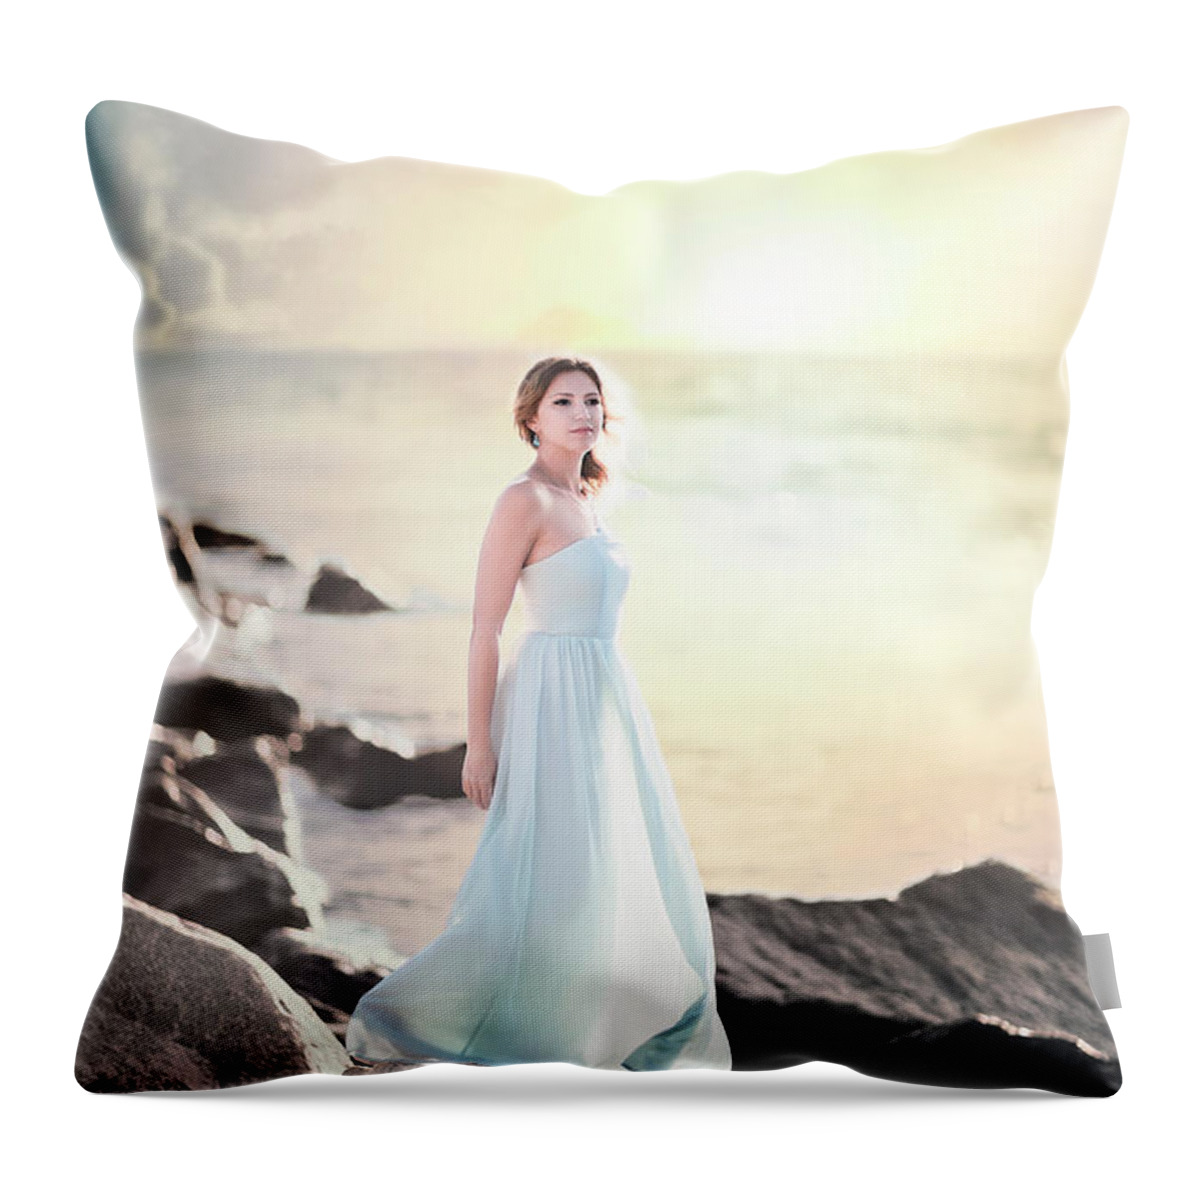 Kremsdorf Throw Pillow featuring the photograph Serenade Of Dreams by Evelina Kremsdorf